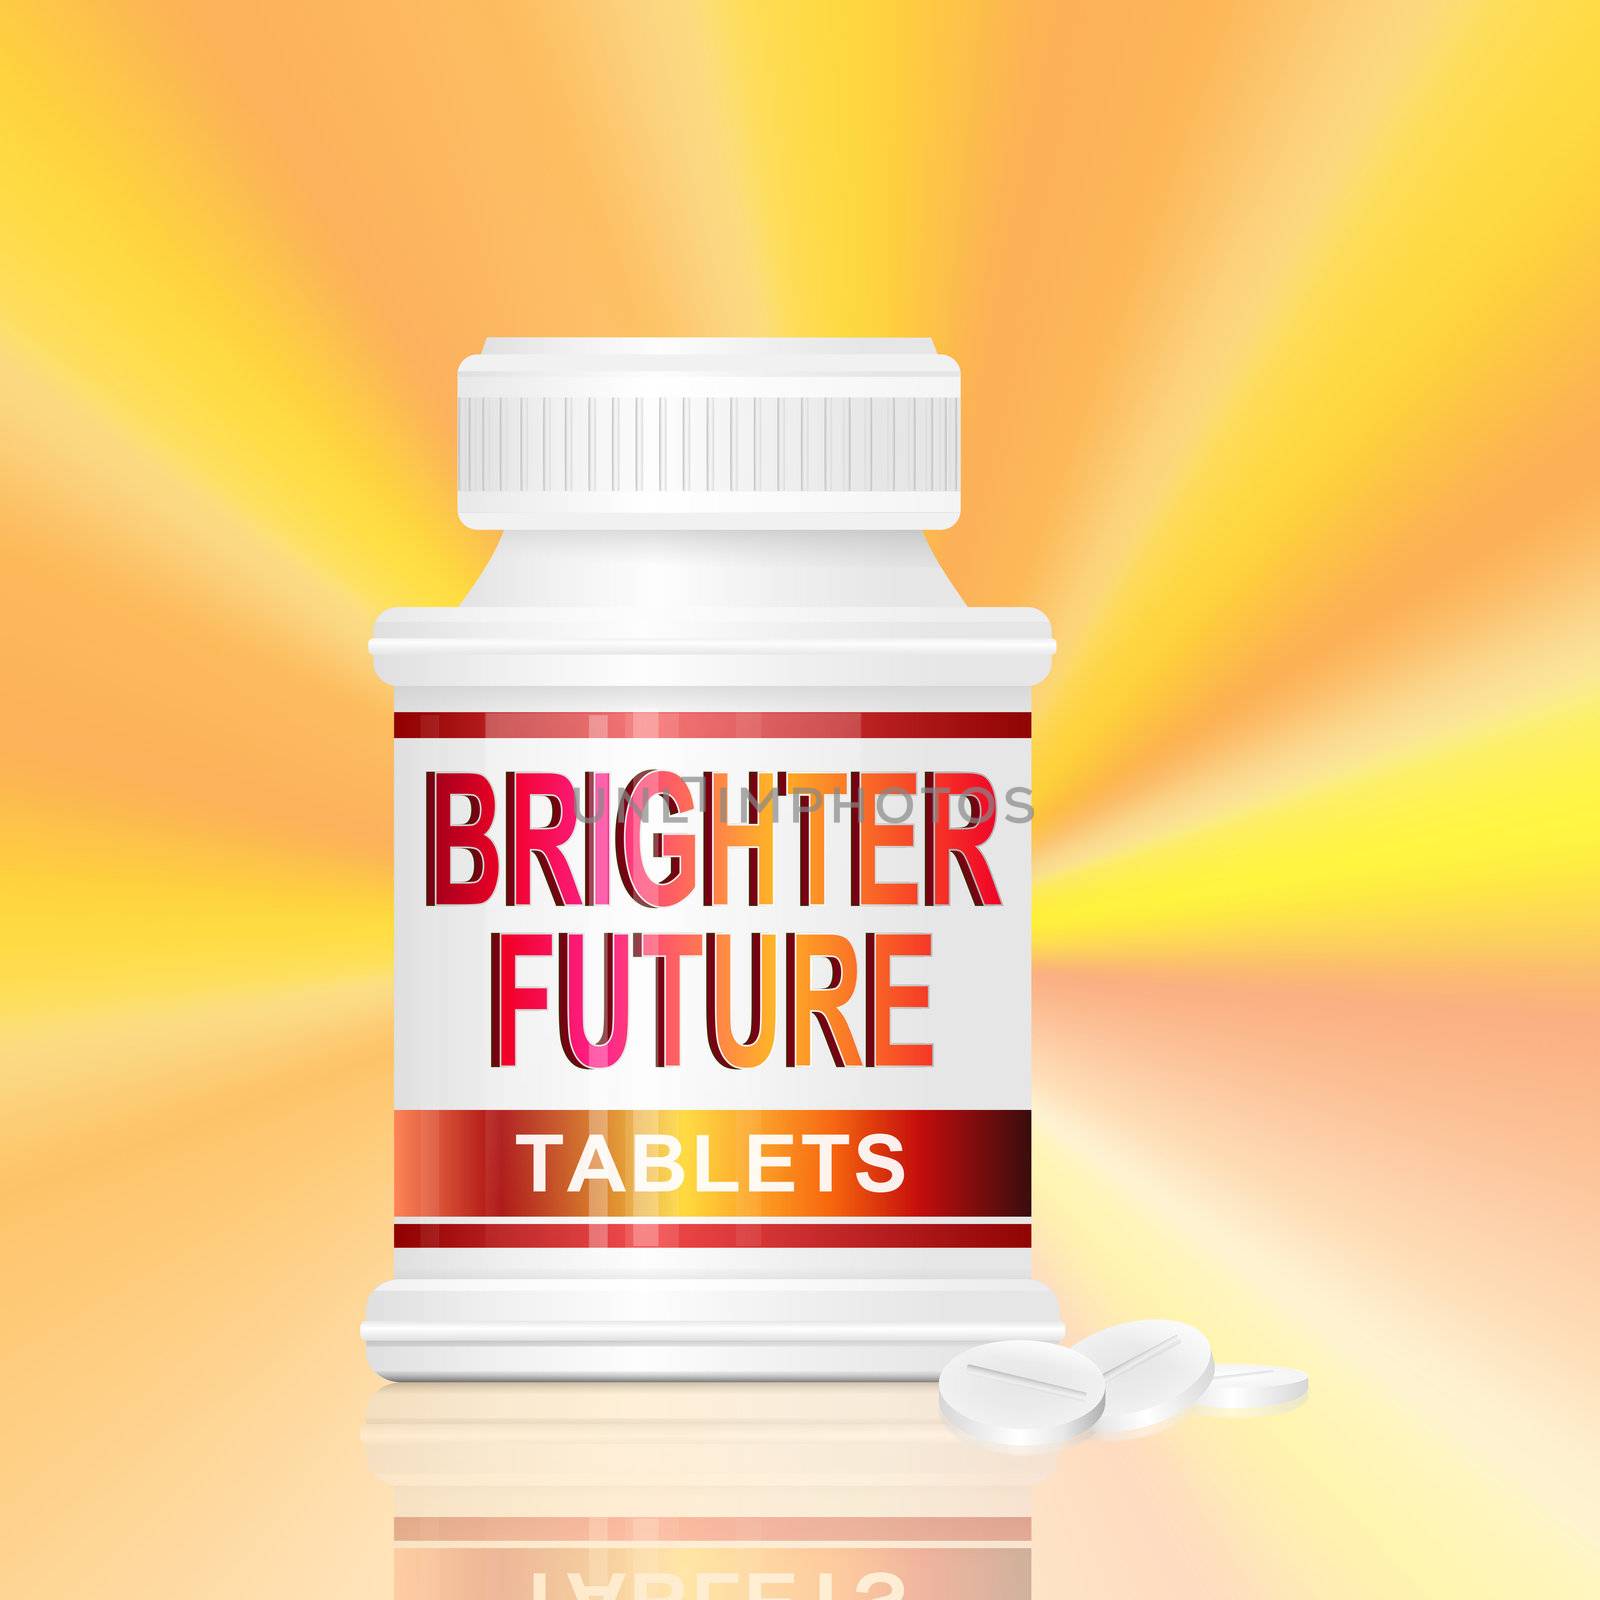 Brighter future concept. by 72soul